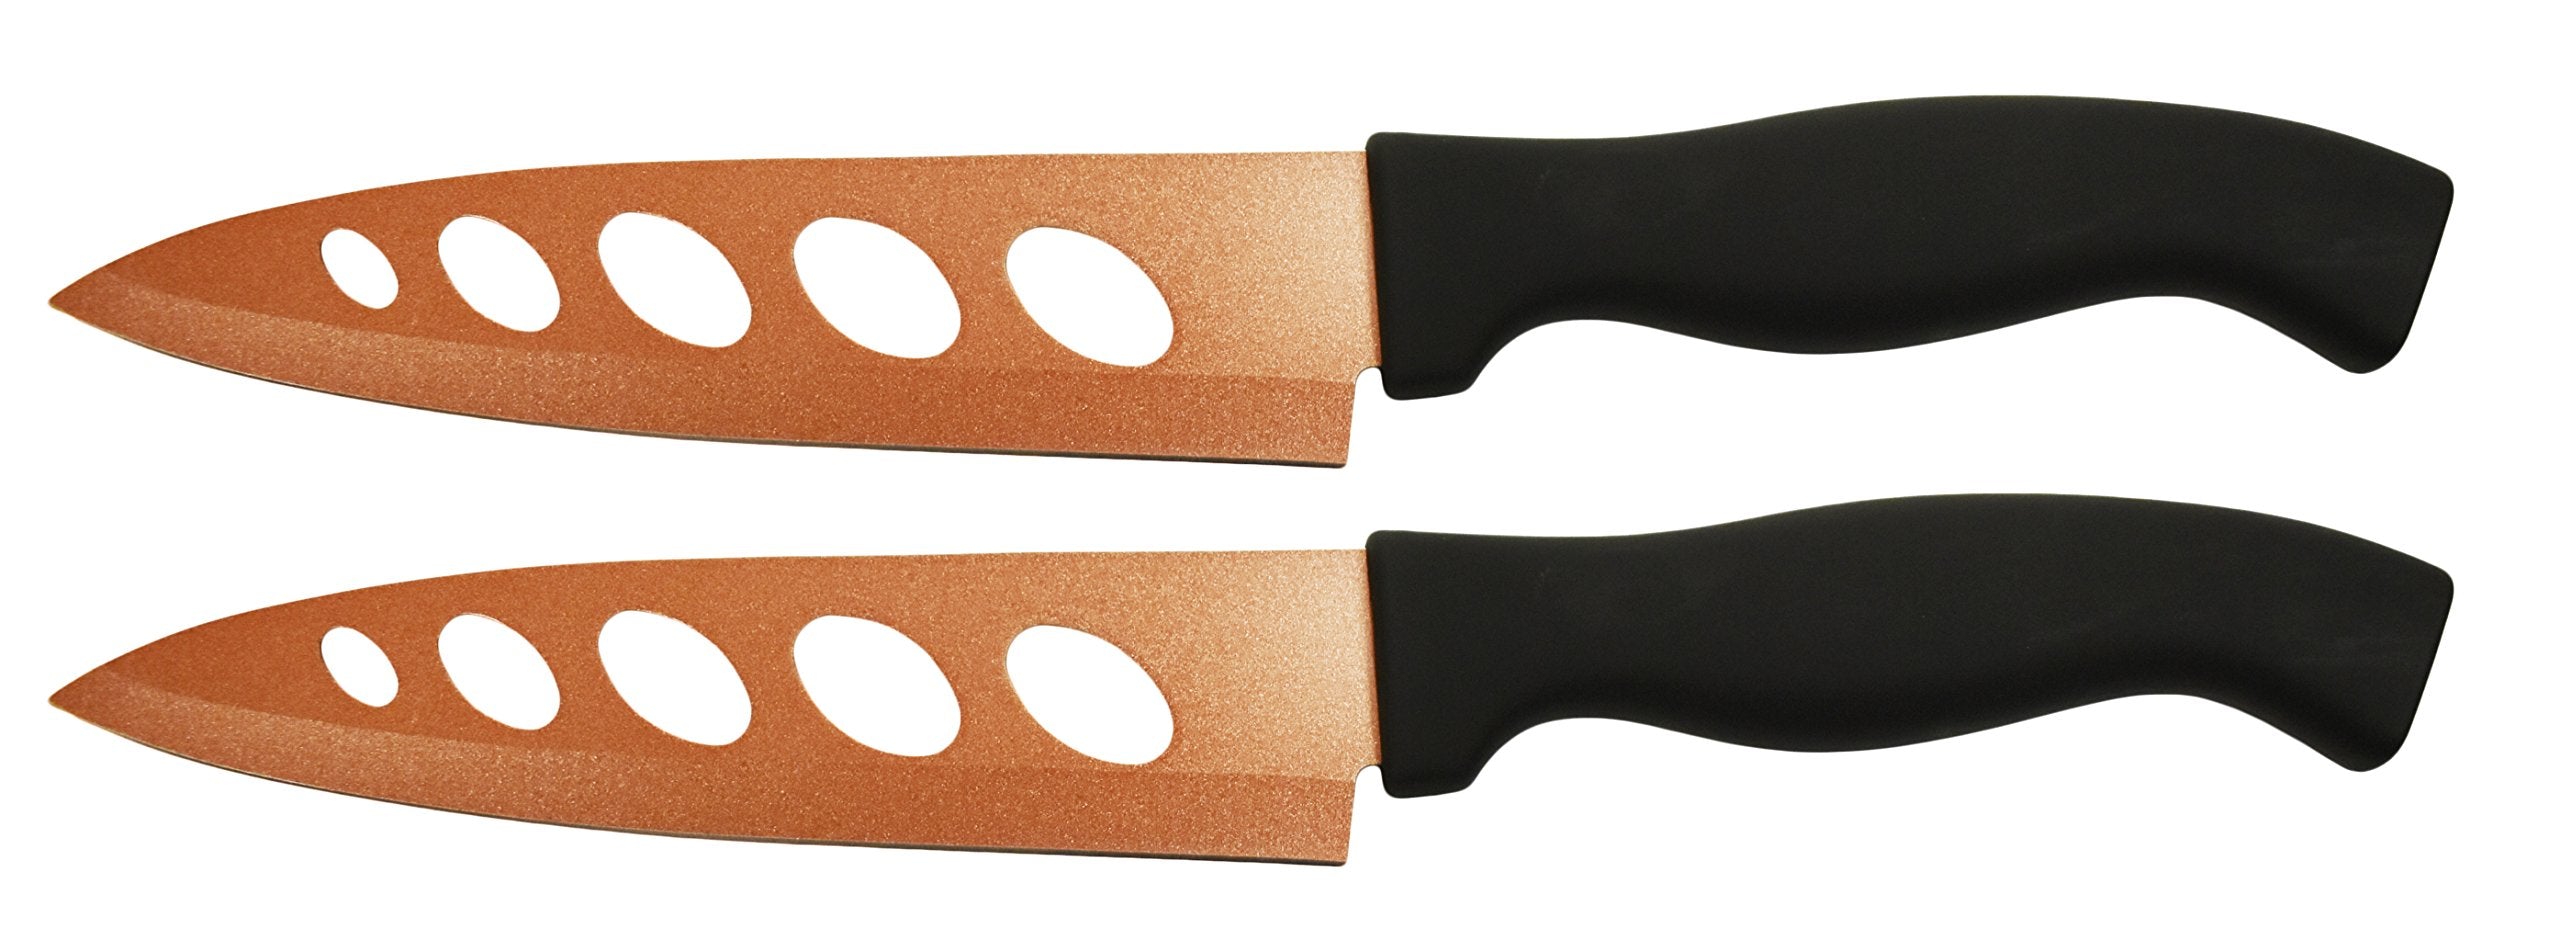 Copper Knife - 2 Pack. Never Needs Sharpening - COPPER KNIFE Stainless Steel Stays Sharp Forever